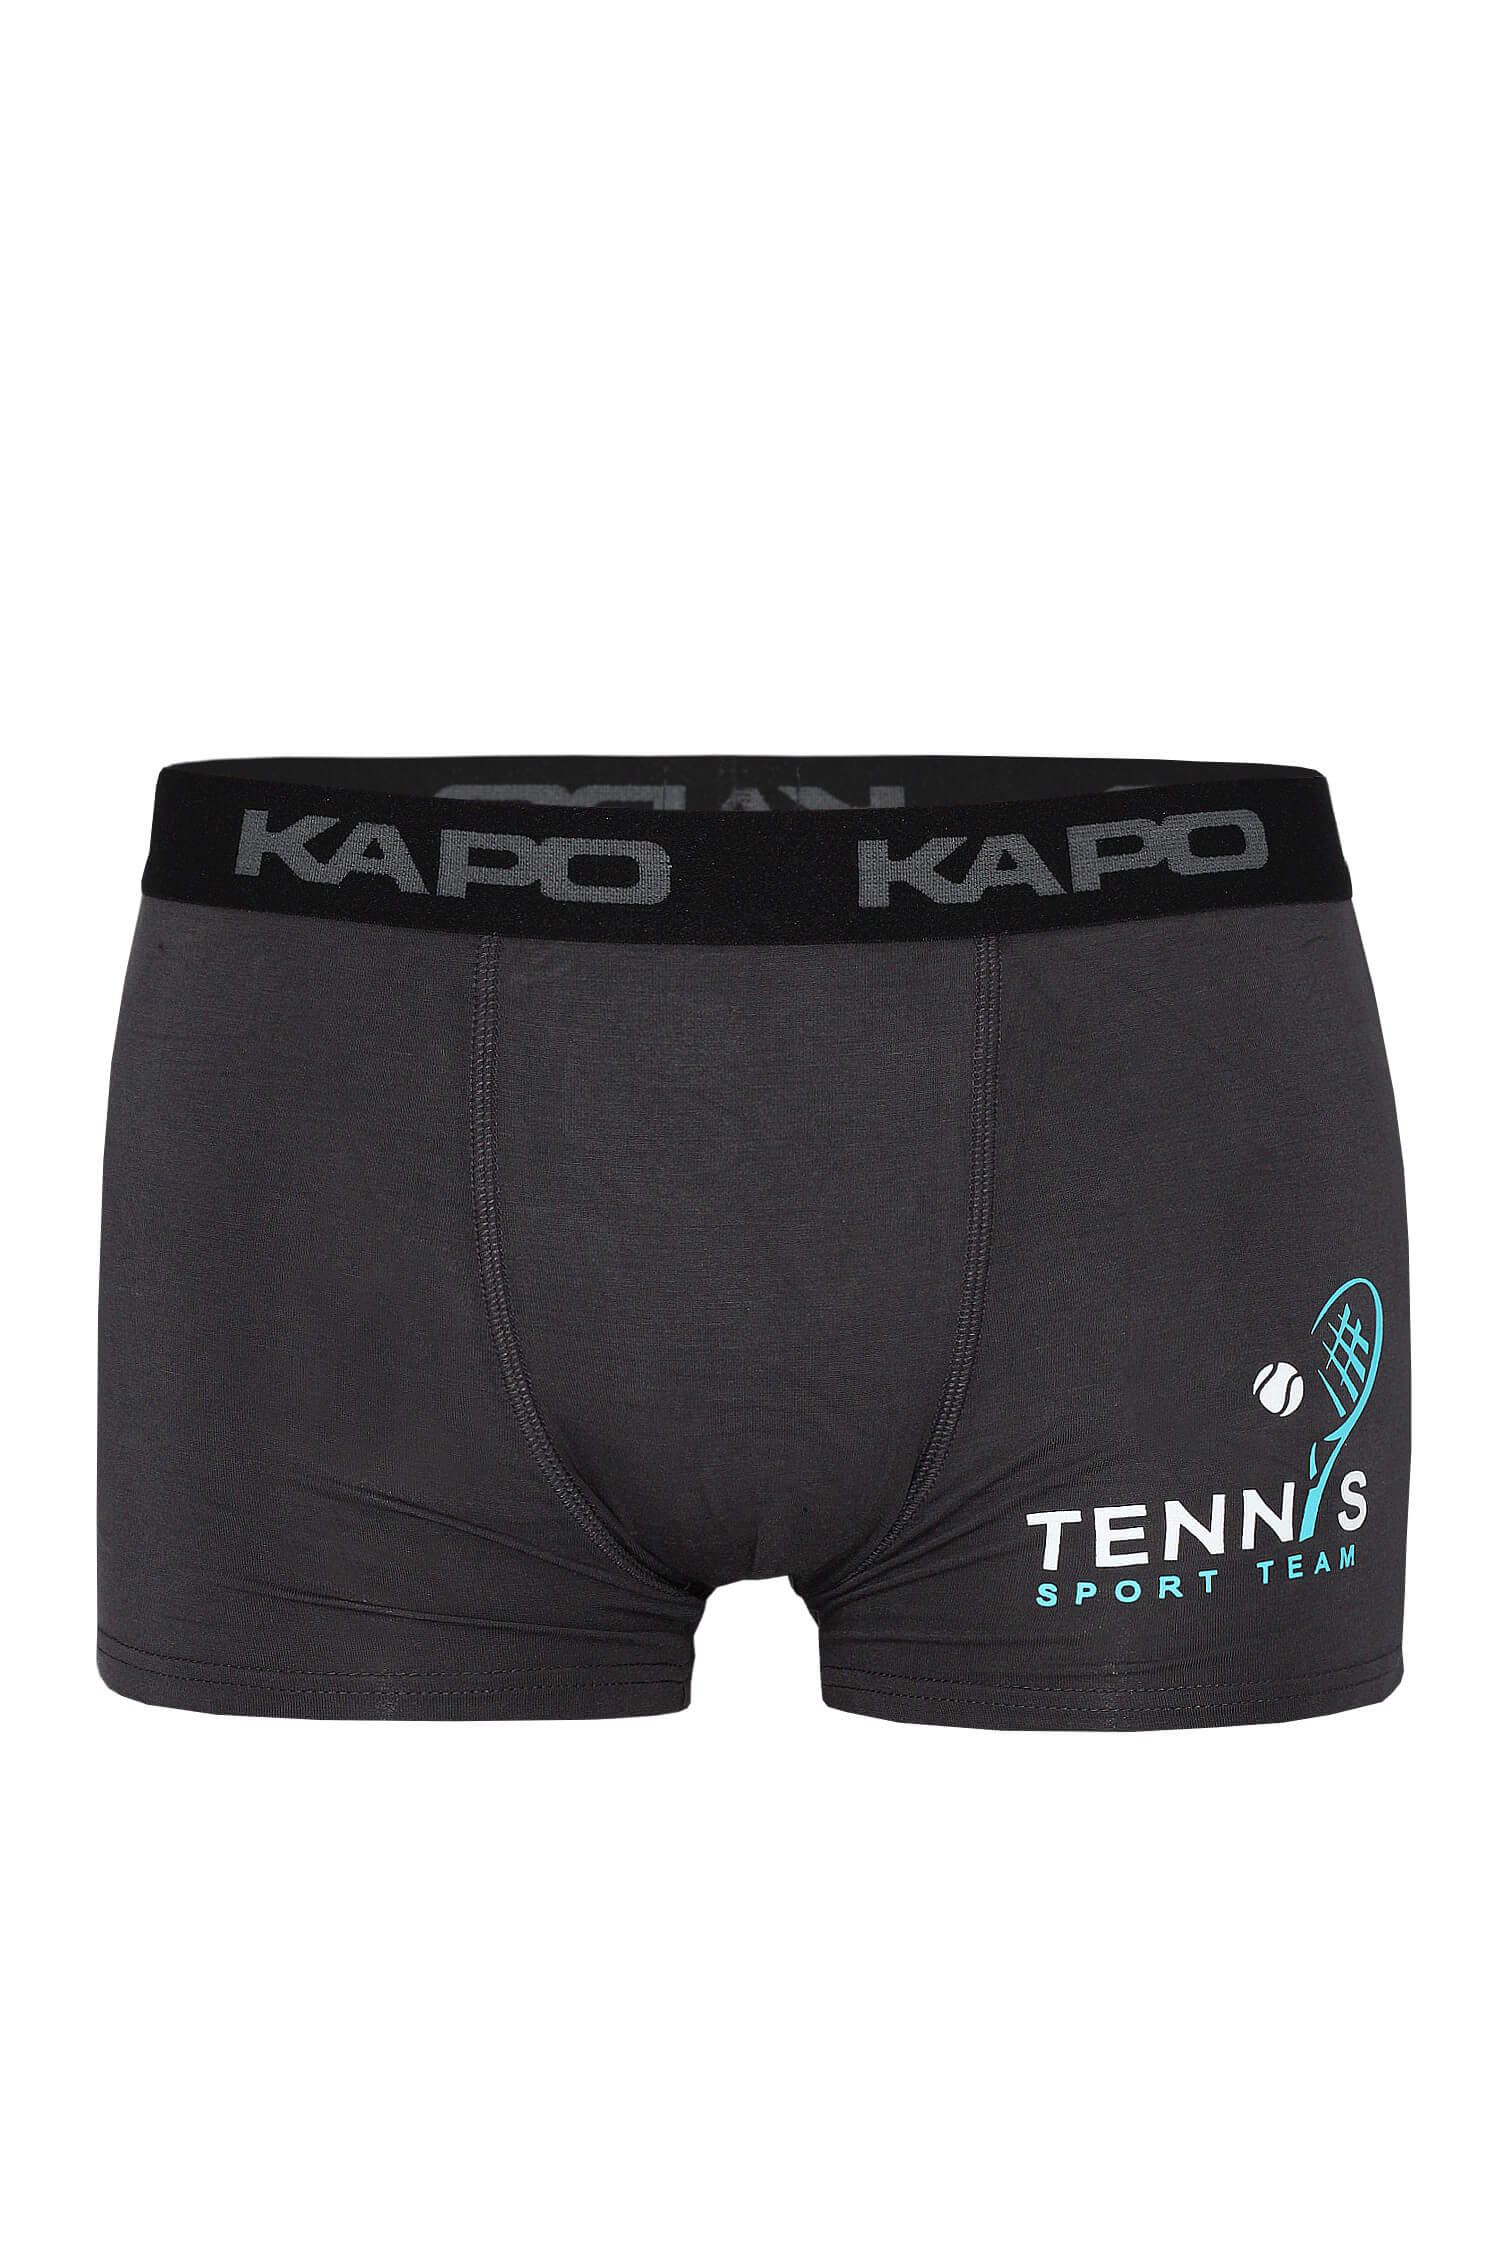 Rafael Kapo tenis boxerky M tmavě šedá